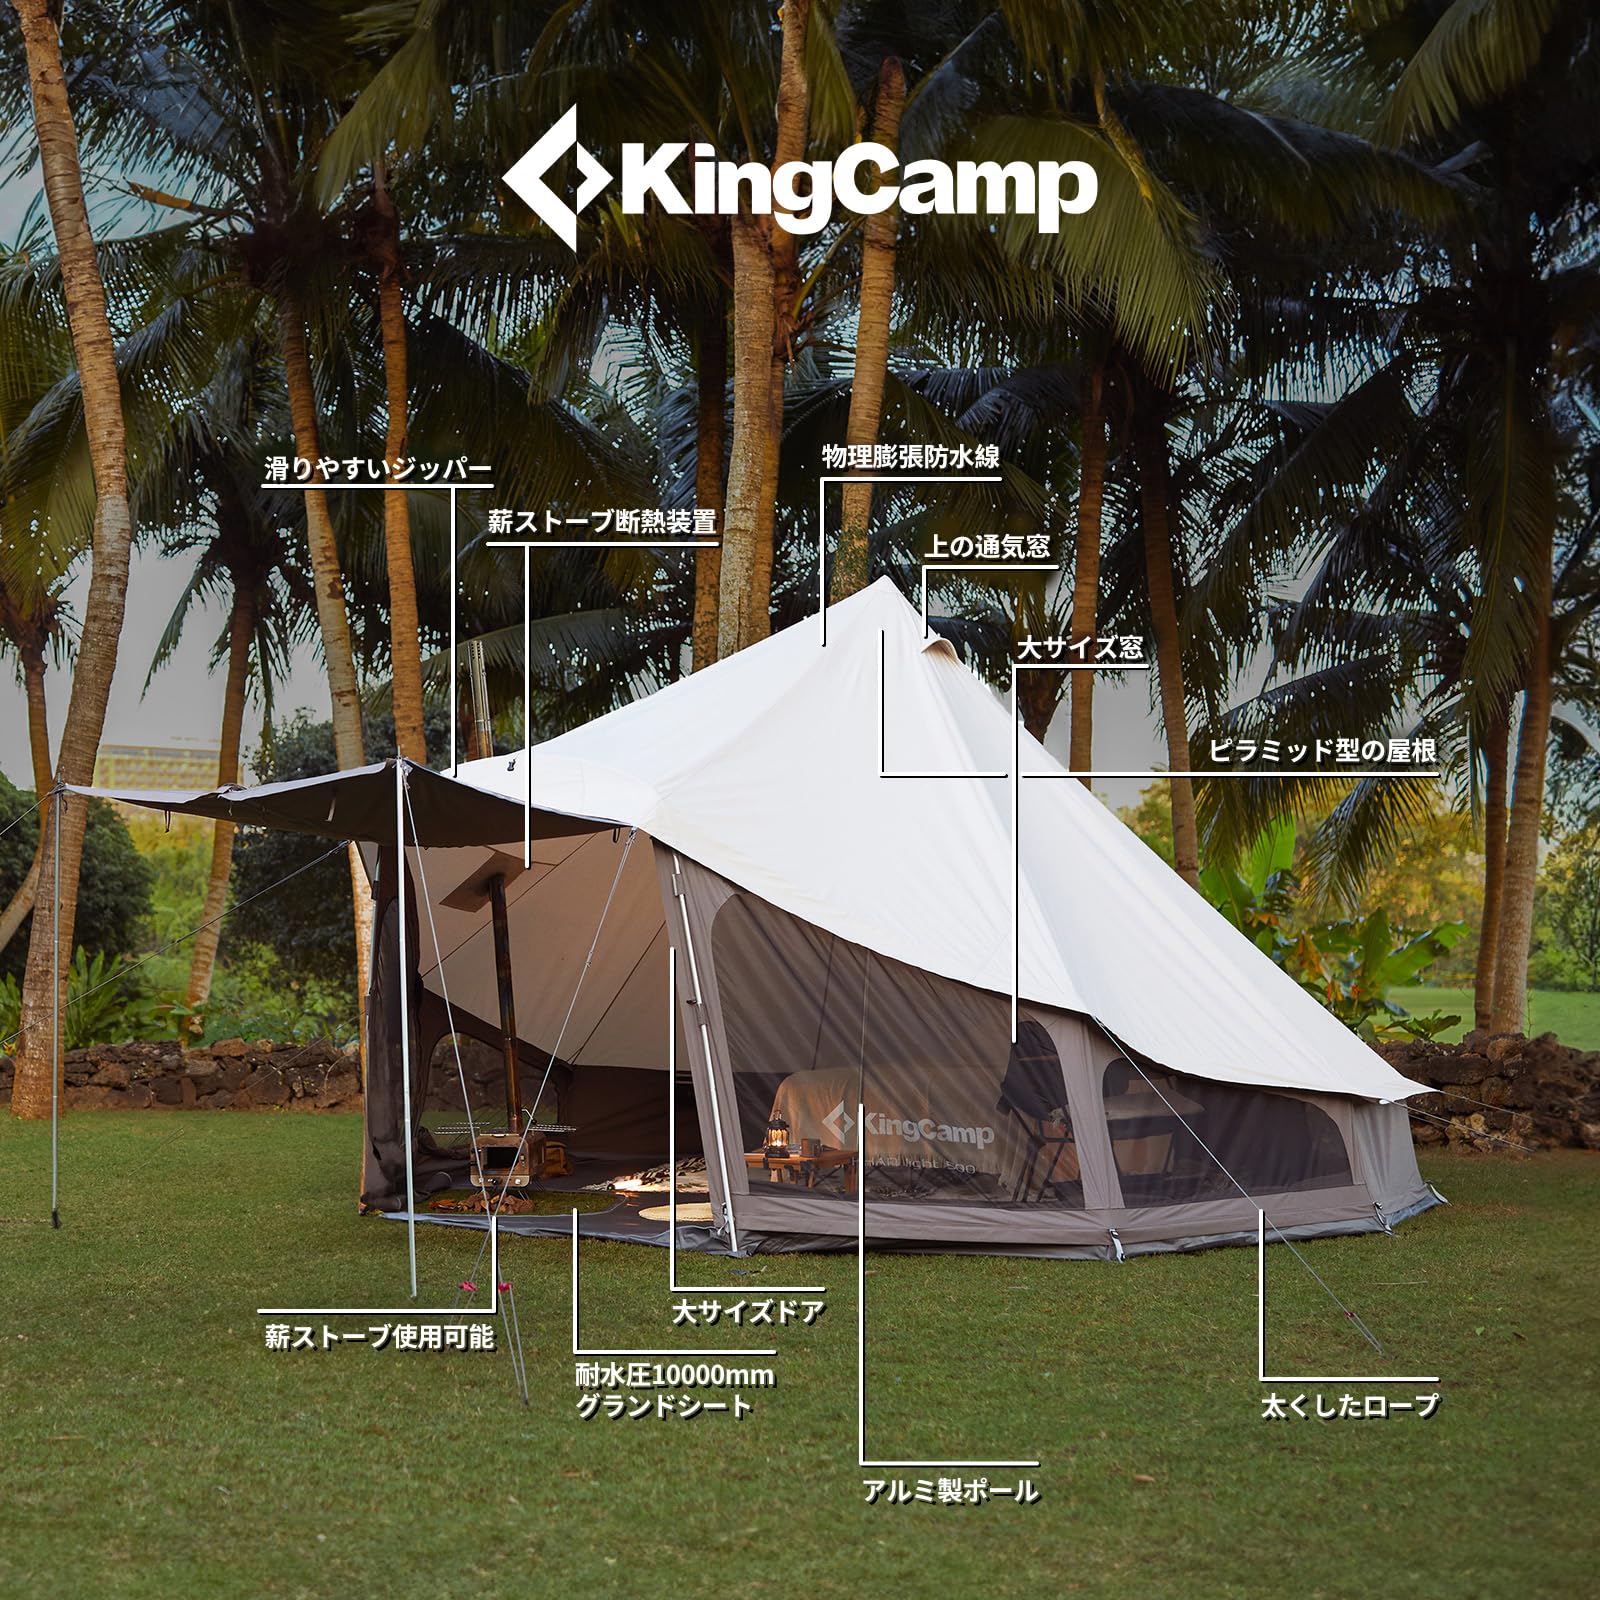 KingCamp KHAN LIGHT 400/500 キャンプテント